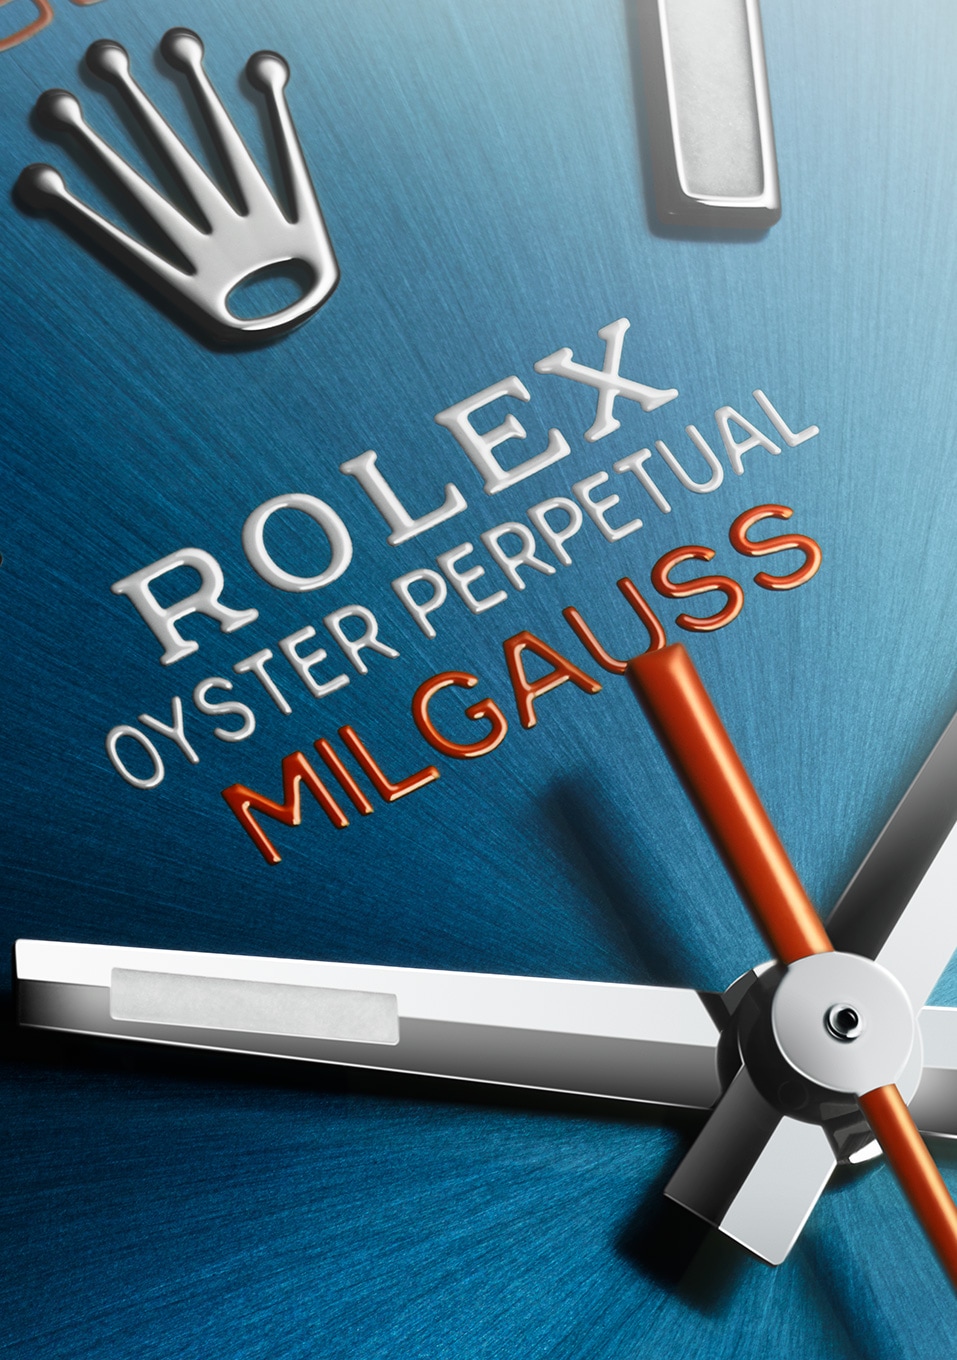 Rolex 2019 PAPERS Rolex Sea-Dweller Deepsea Cameron Blue 126660 44mm Watch BoxRolex Presidential 179178 26mm White Presidential 18K 750 2004 Yellow Gold Watch